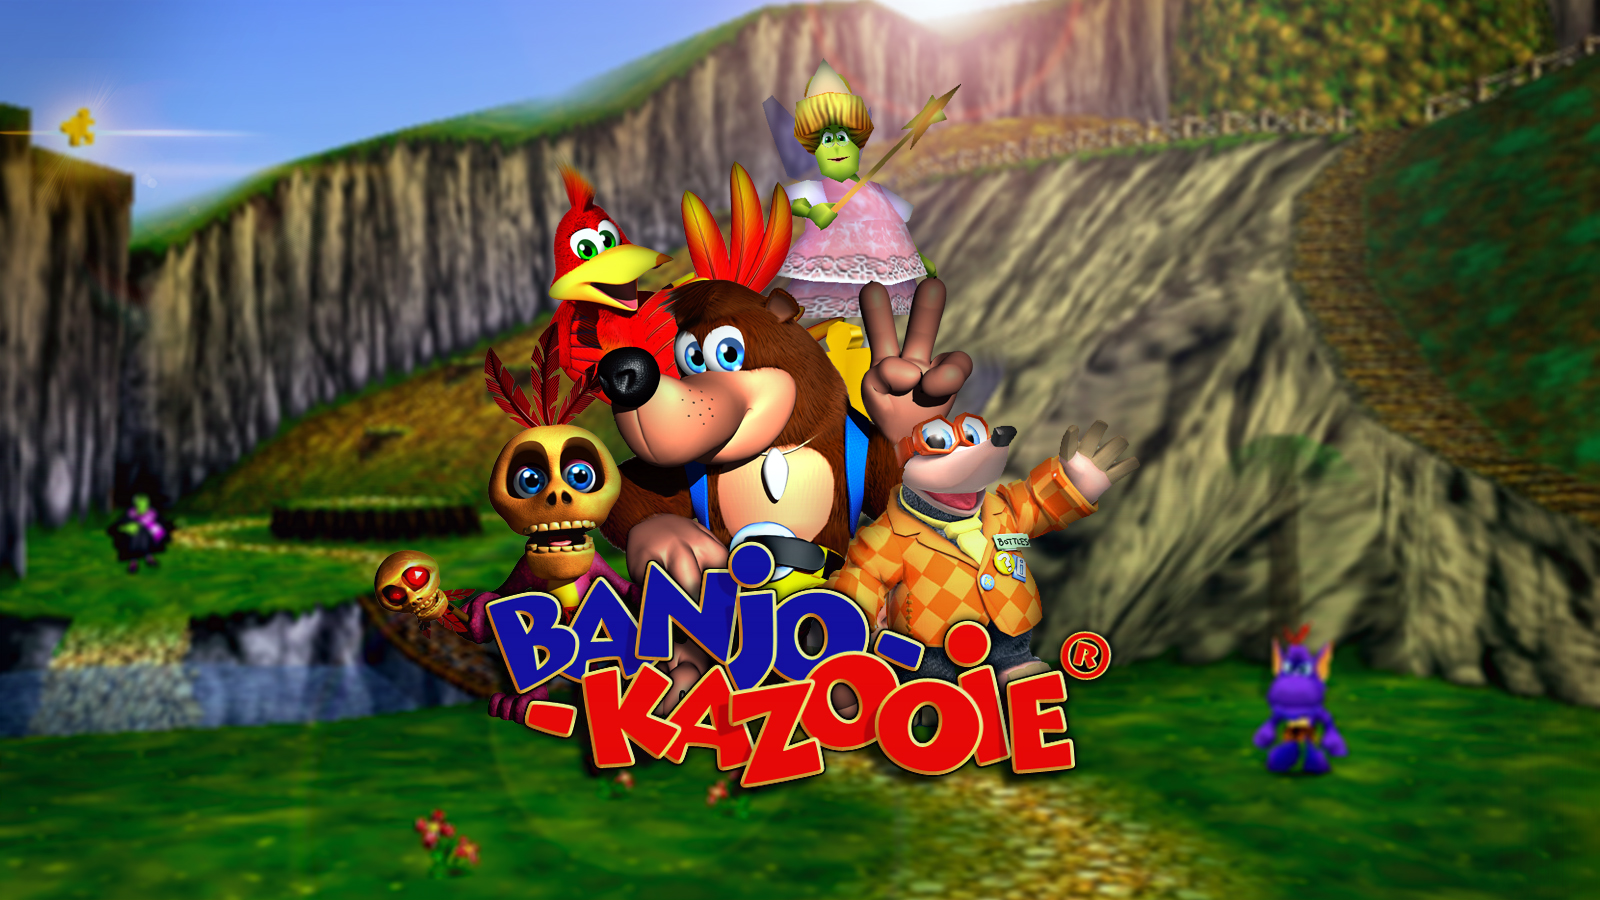  Review - The Best Banjo-Kazooie Romhack